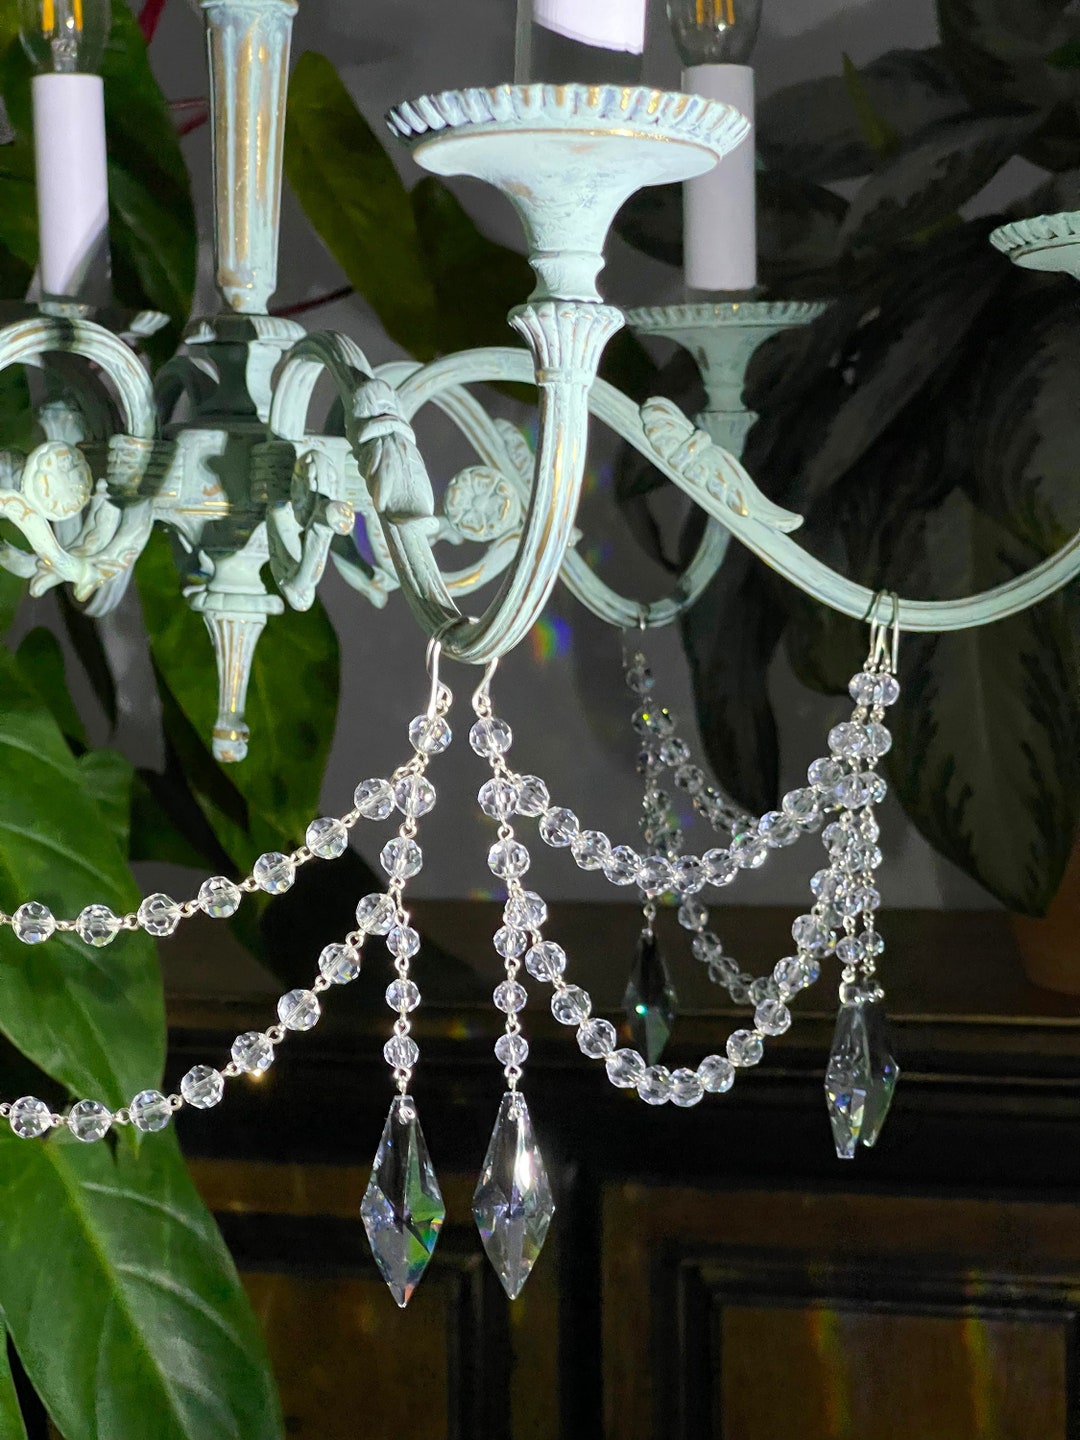 6-set Unique Crystal Decor Hangings, Suncatcher Crystals for